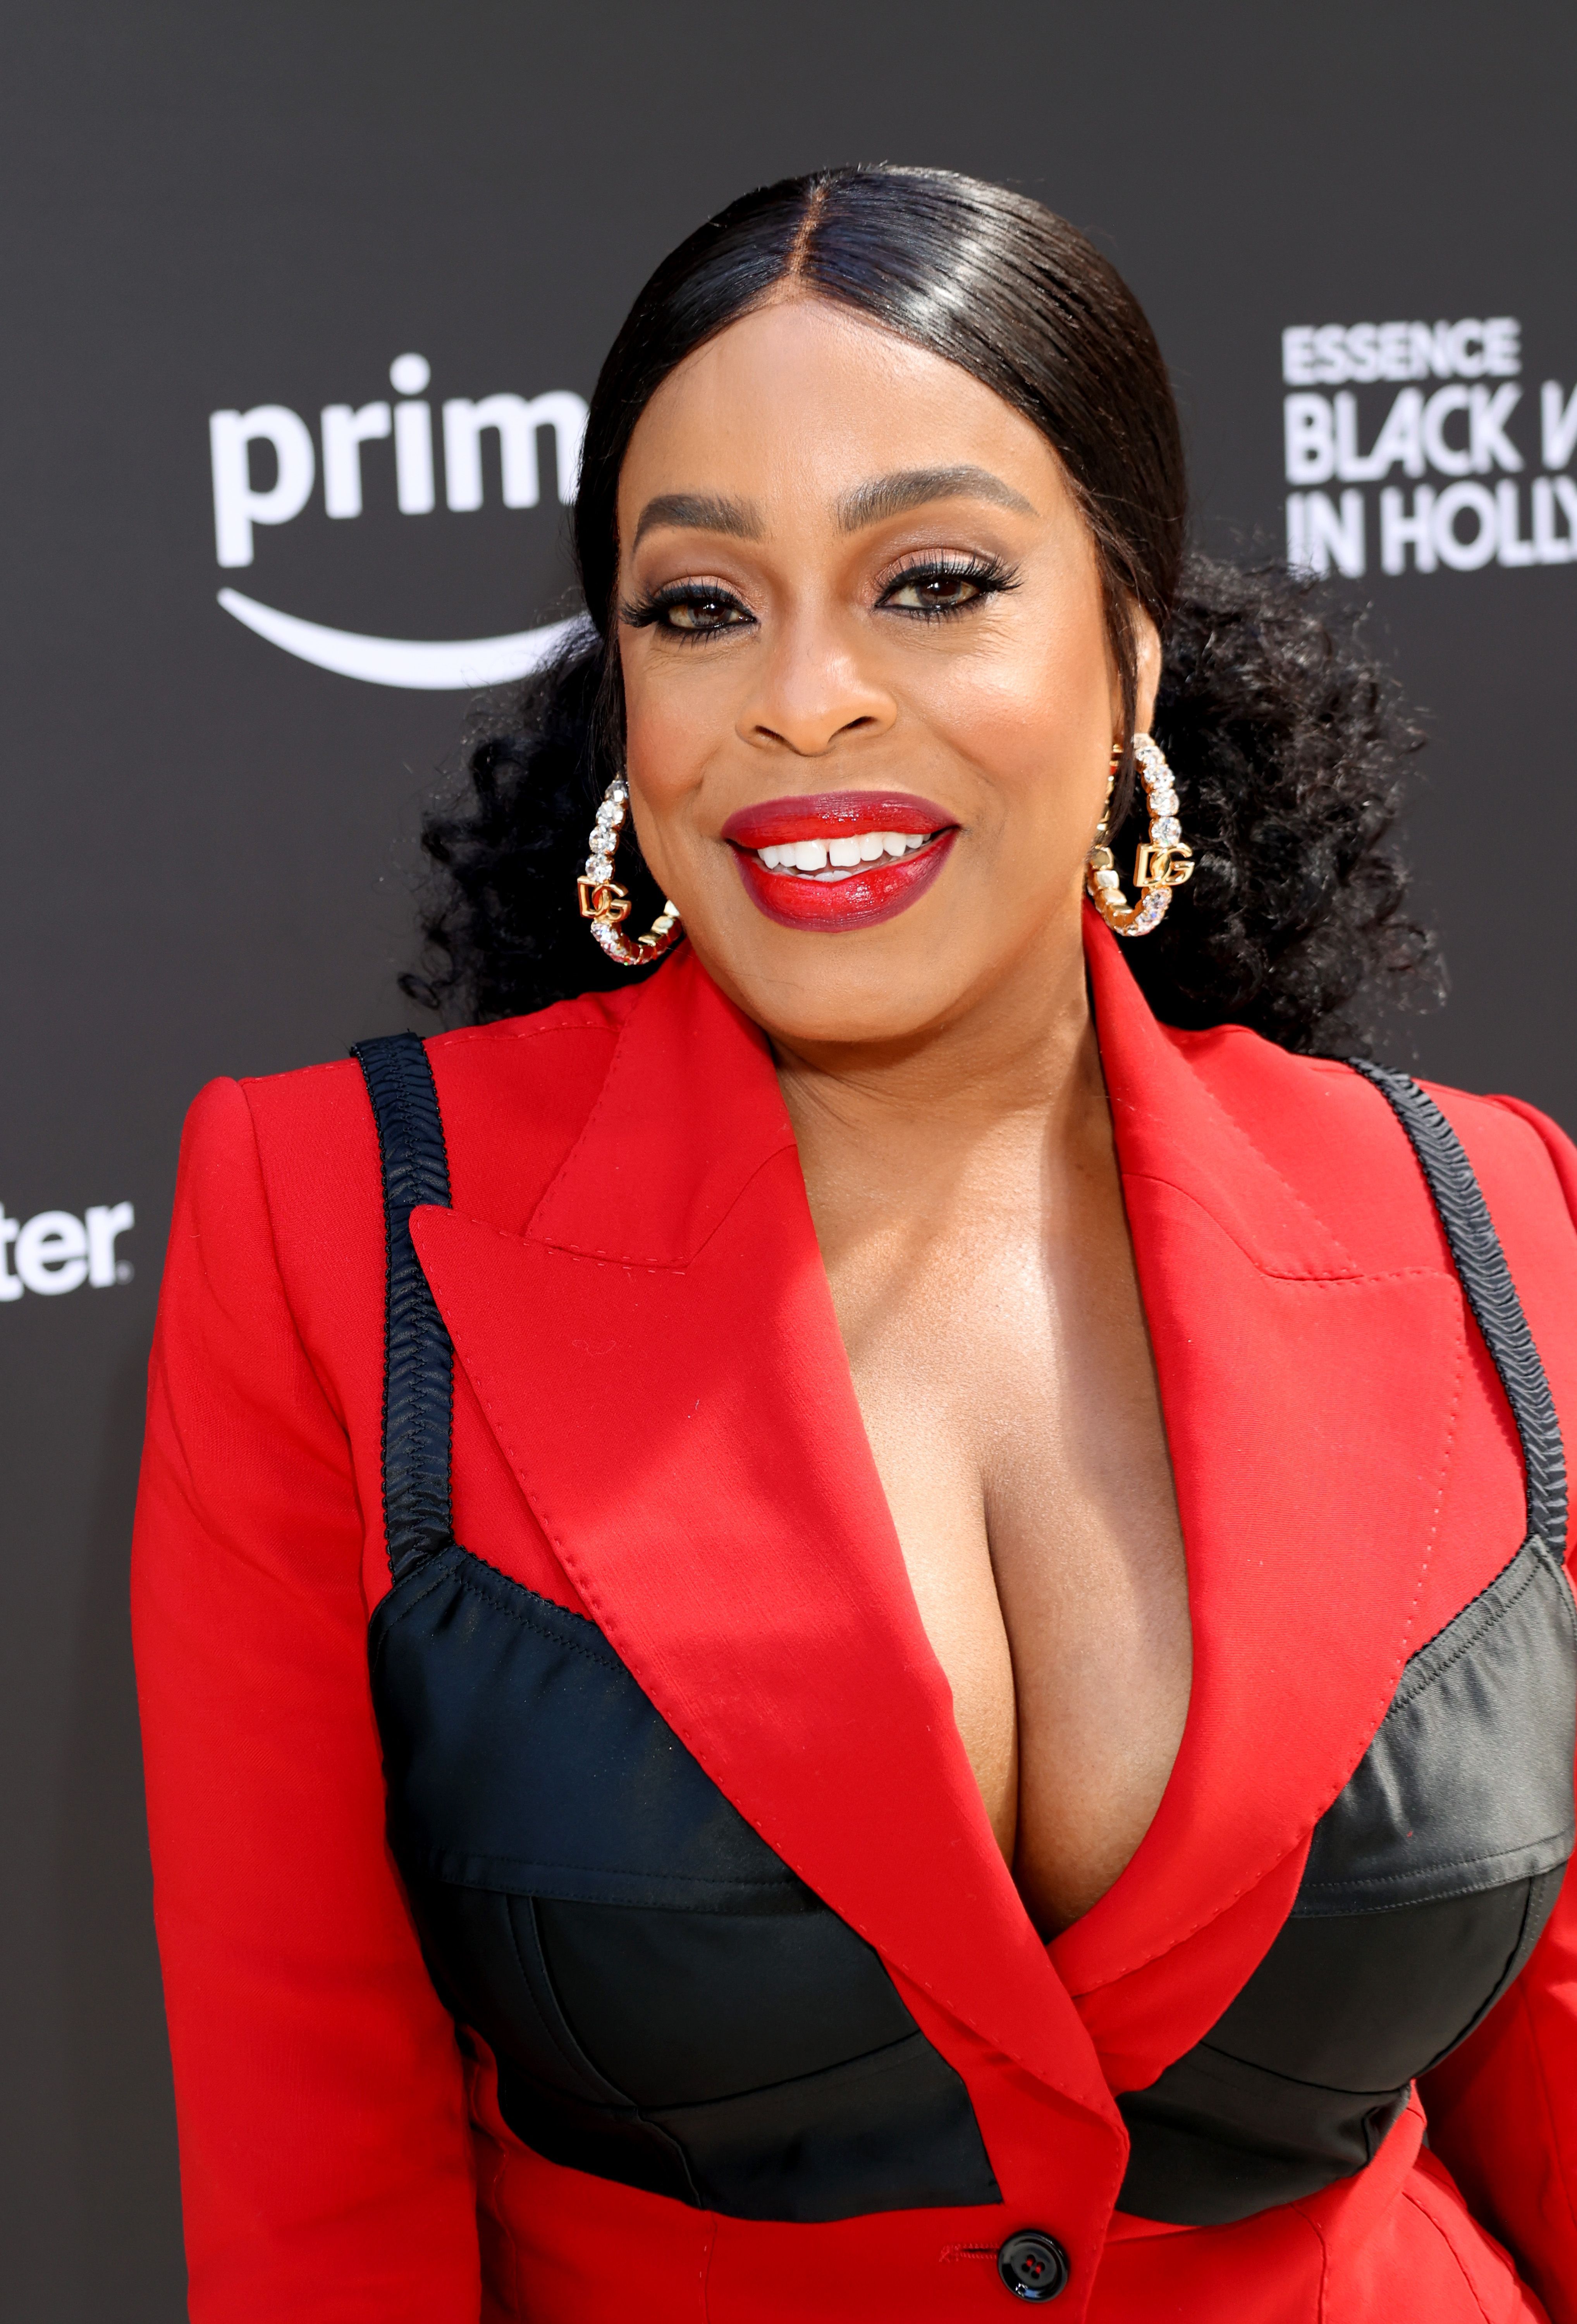 Hollywood'da ESSENCE Siyah Kadınlar